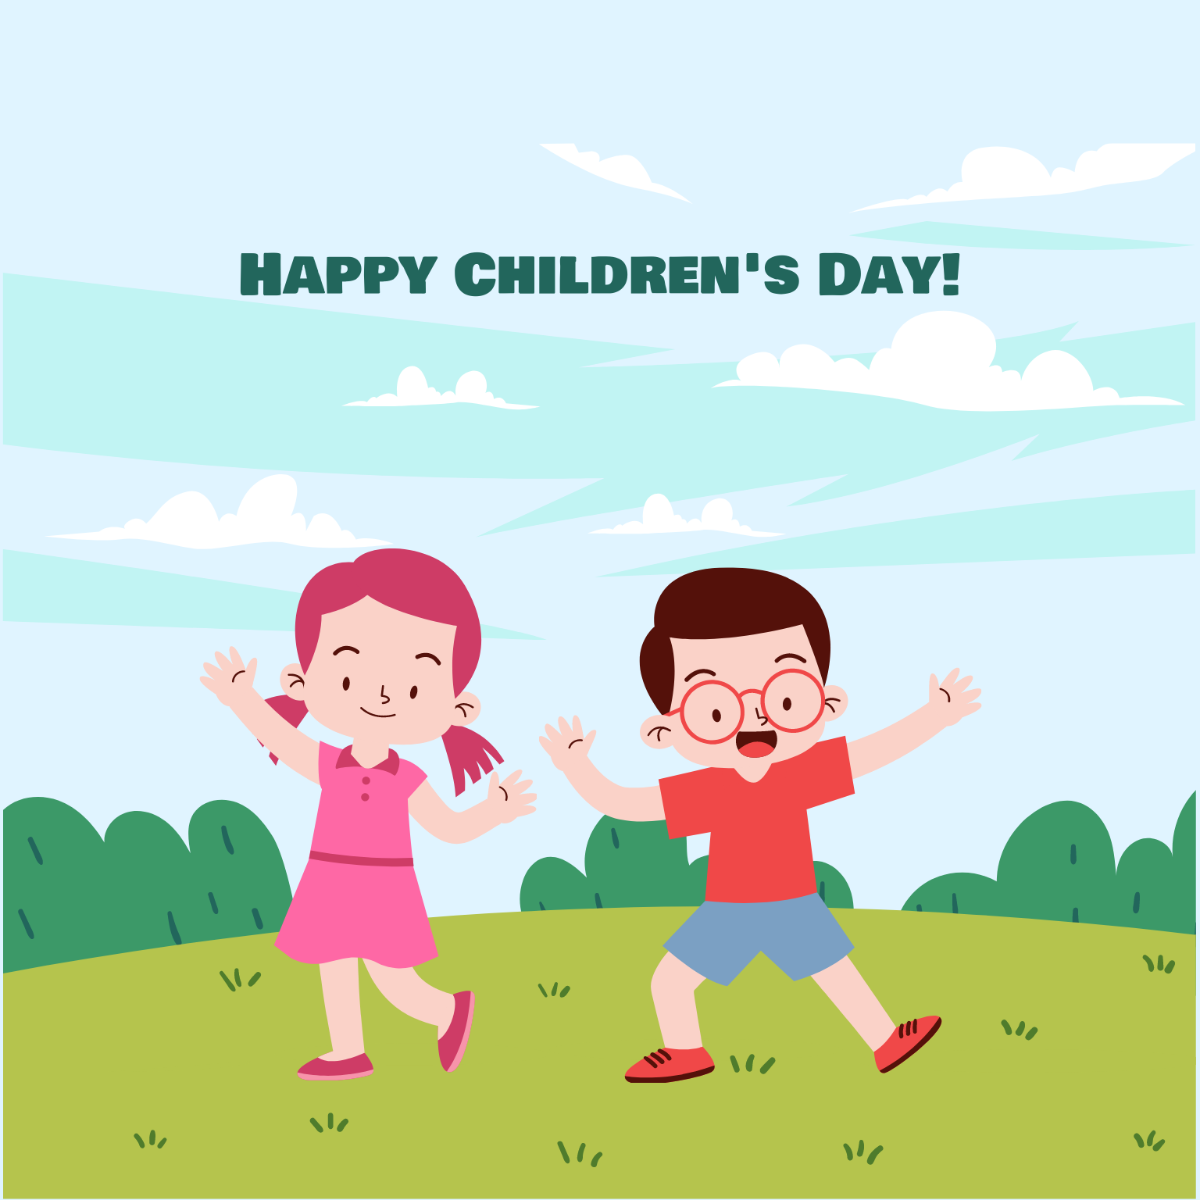 Happy Children's Day Illustration Template